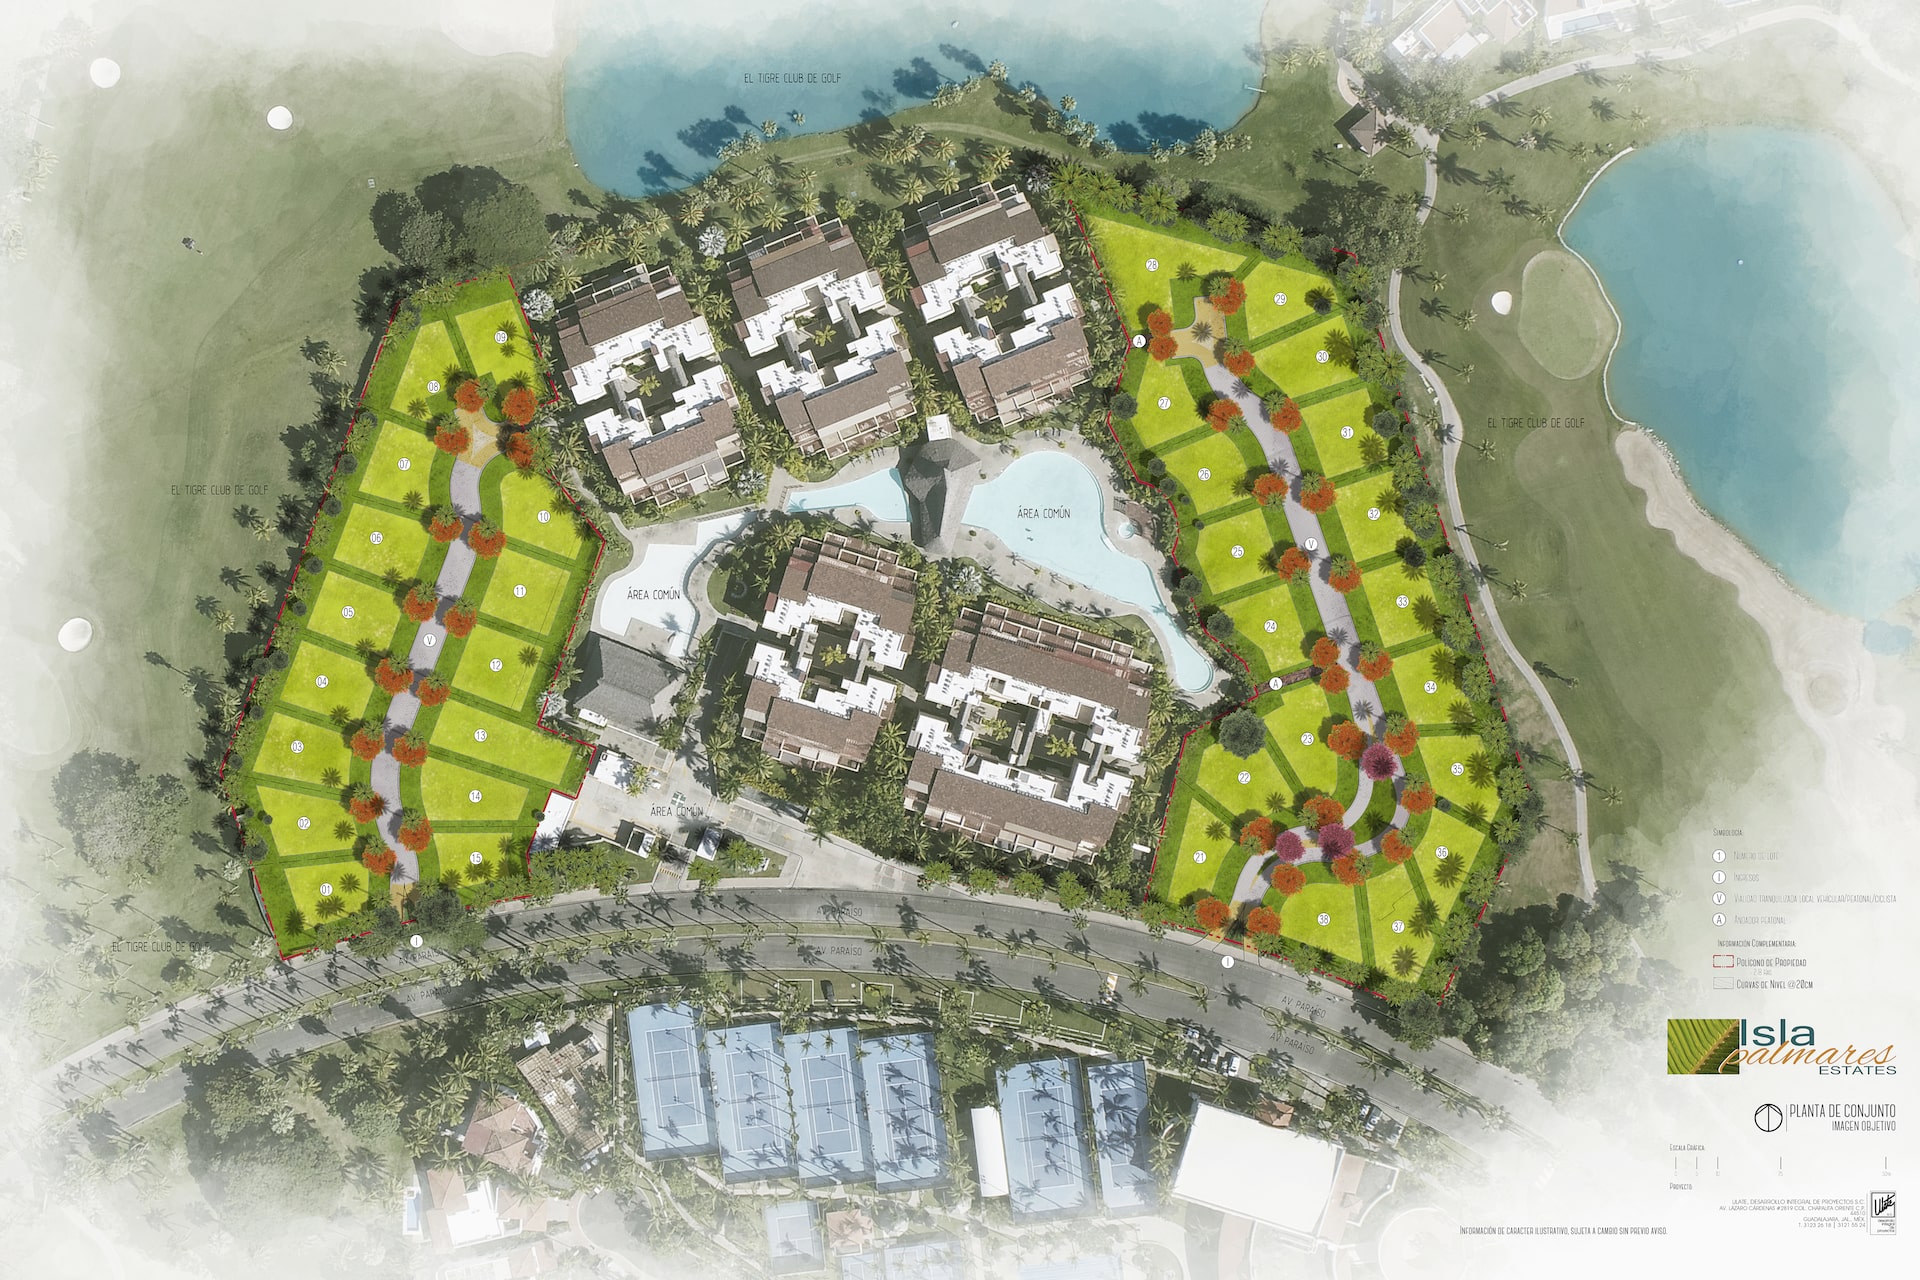 Isla Palmares Estates Master Plan